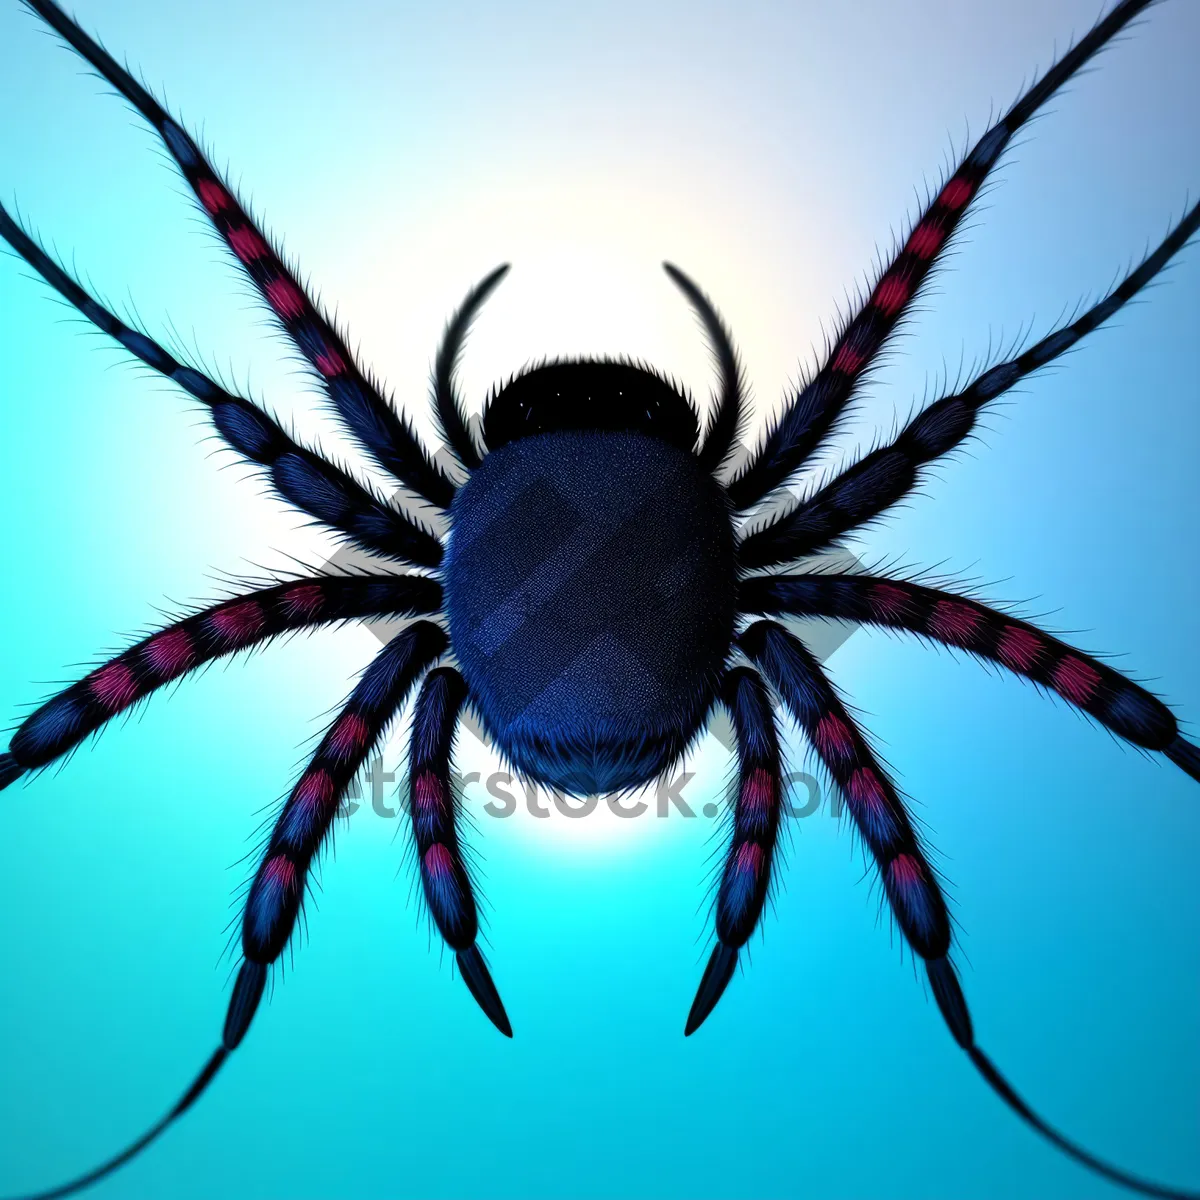 Picture of Barn Spider - Close-up Arachnid Invertebrate Image